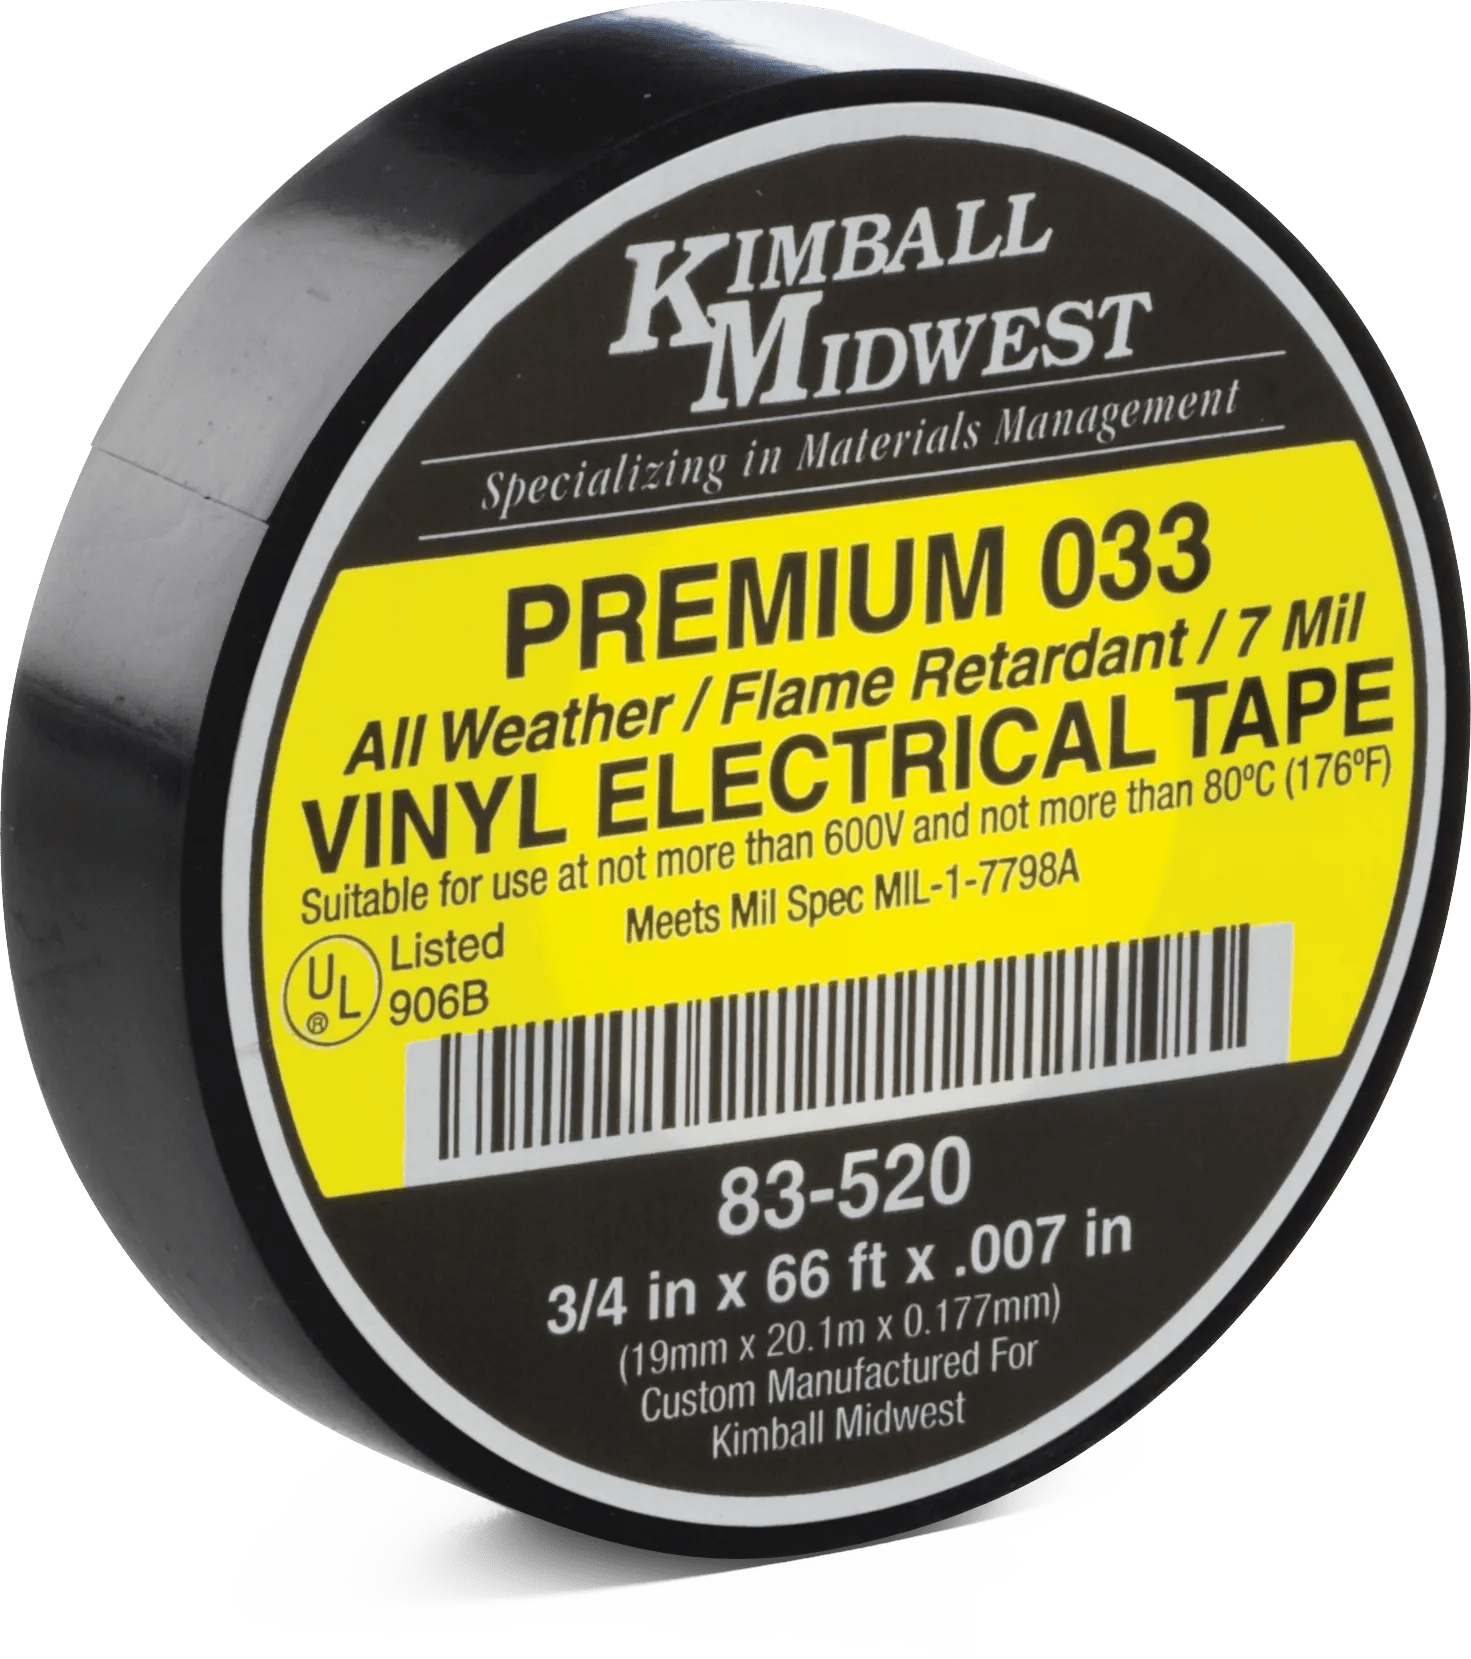 3/4" x 66' 7 mil Premium 033 Electrical Tape